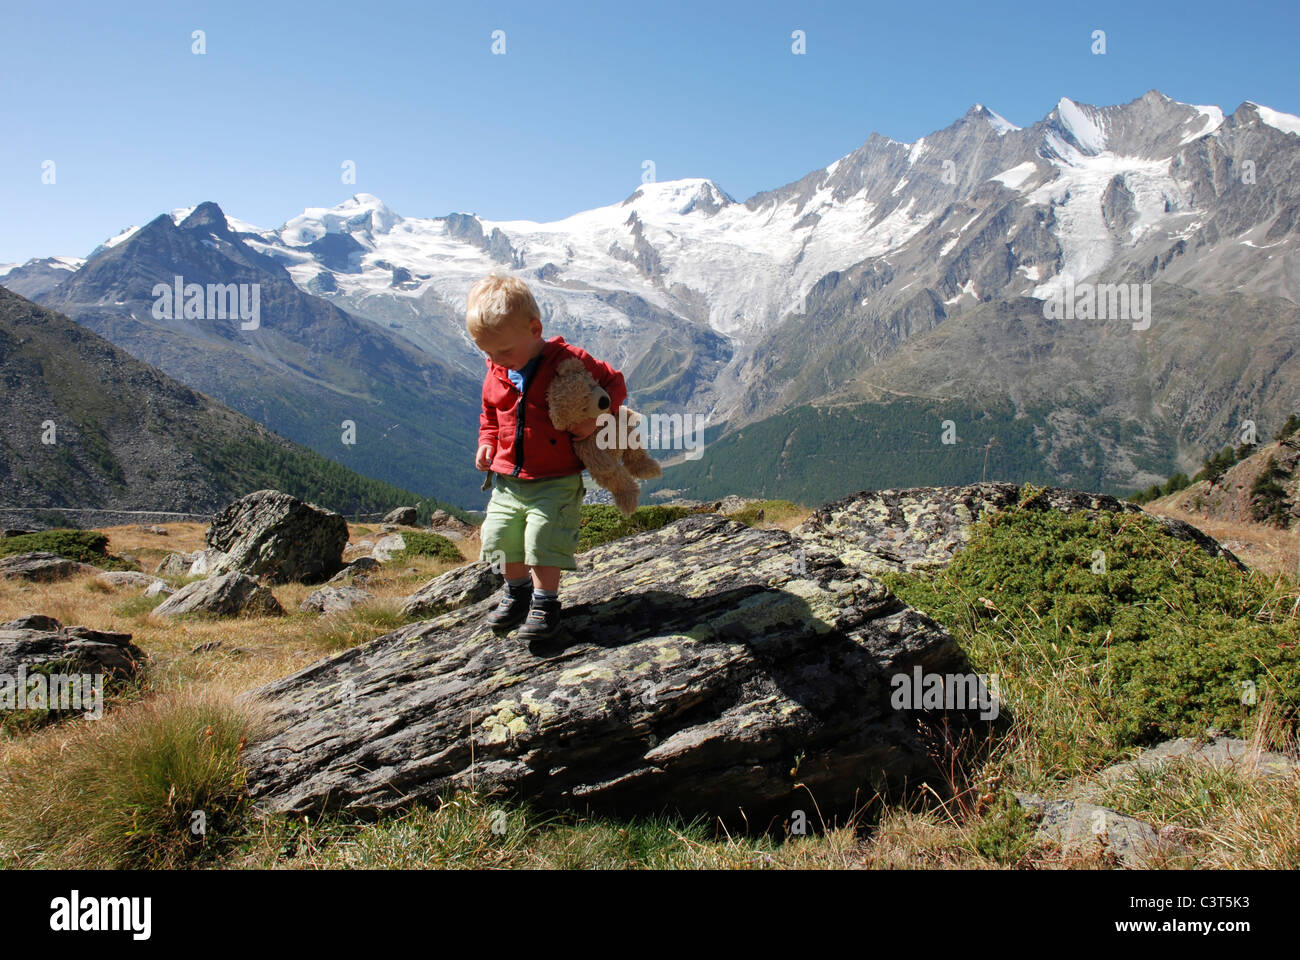 A young boy having fun playing on the rocks at Kreuzboden, Saas Grund, Switzerland. Stock Photo